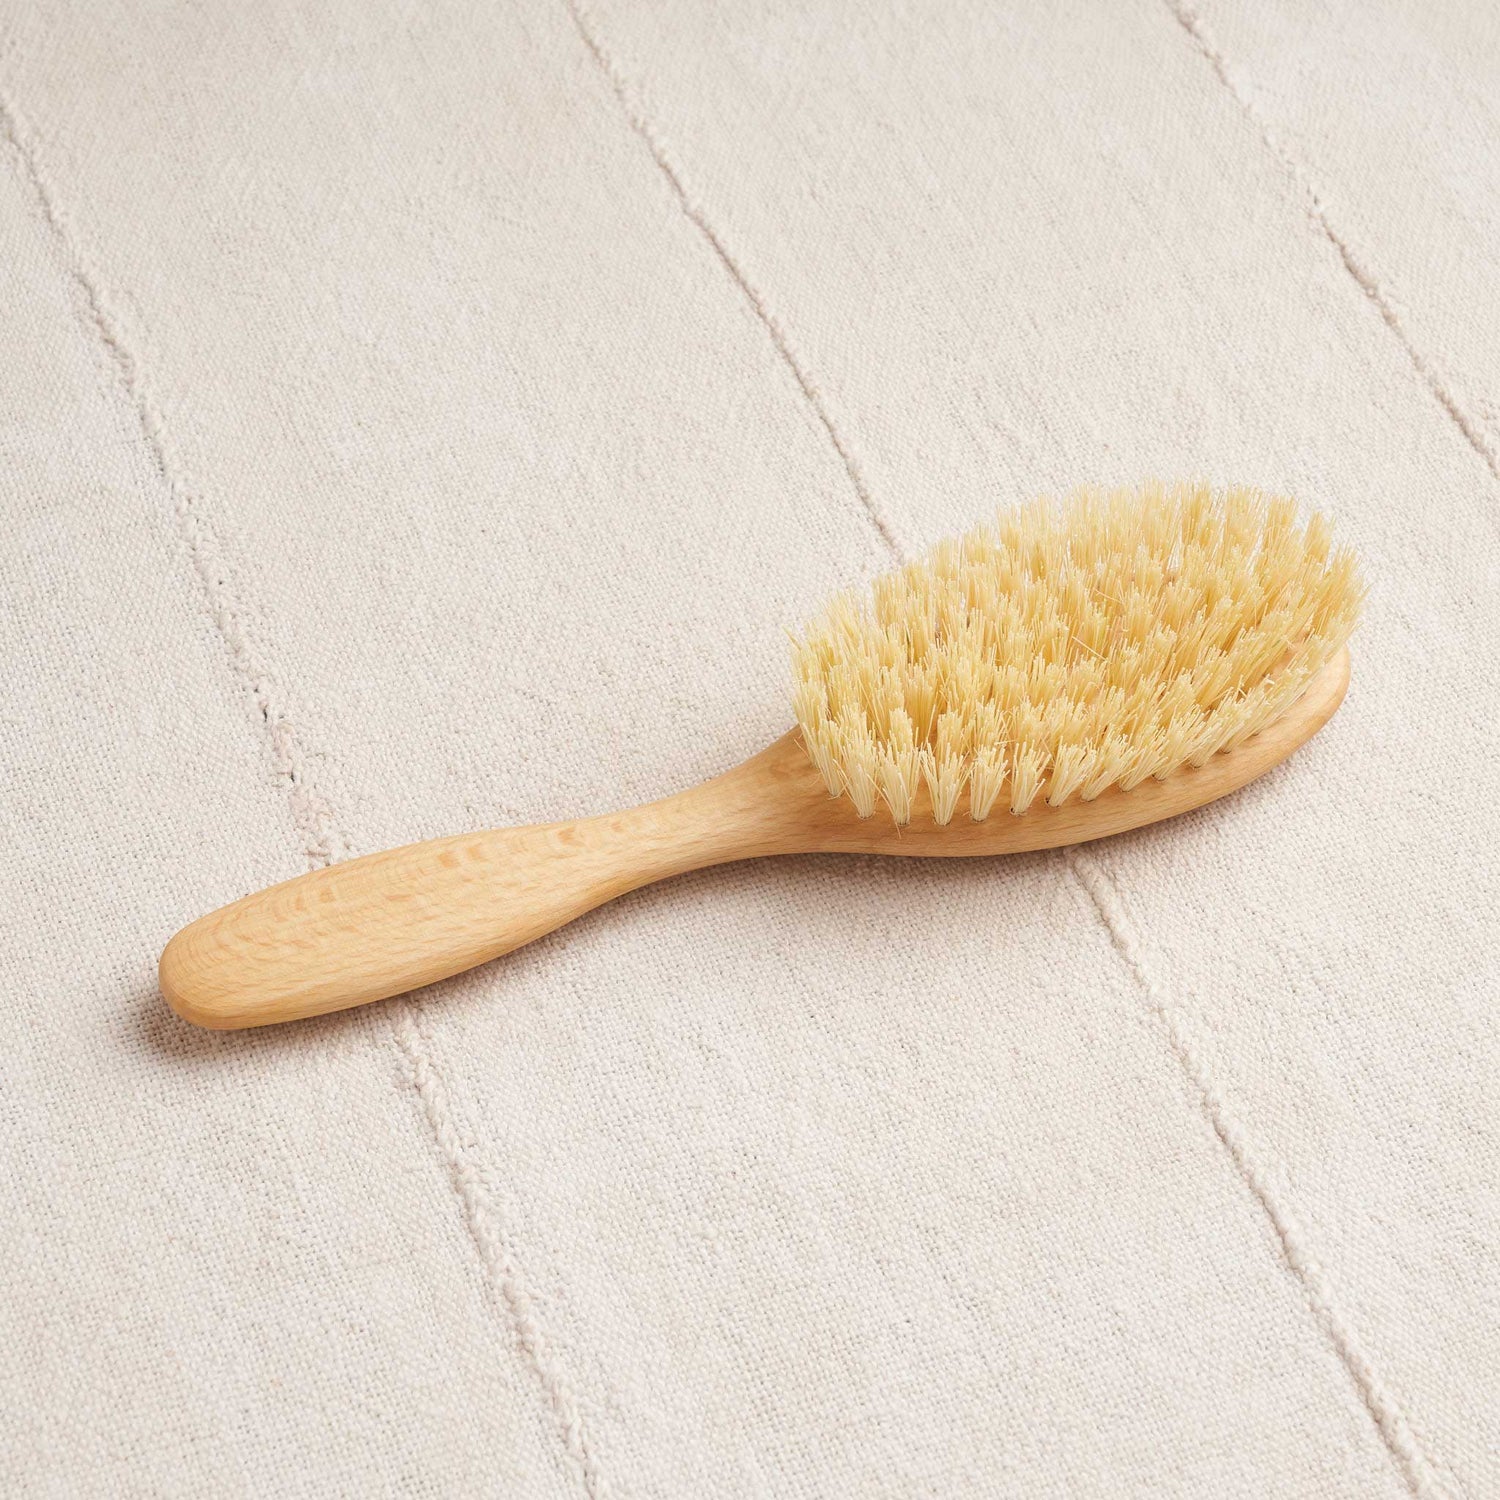 Ixtle Bristle Hairbrush